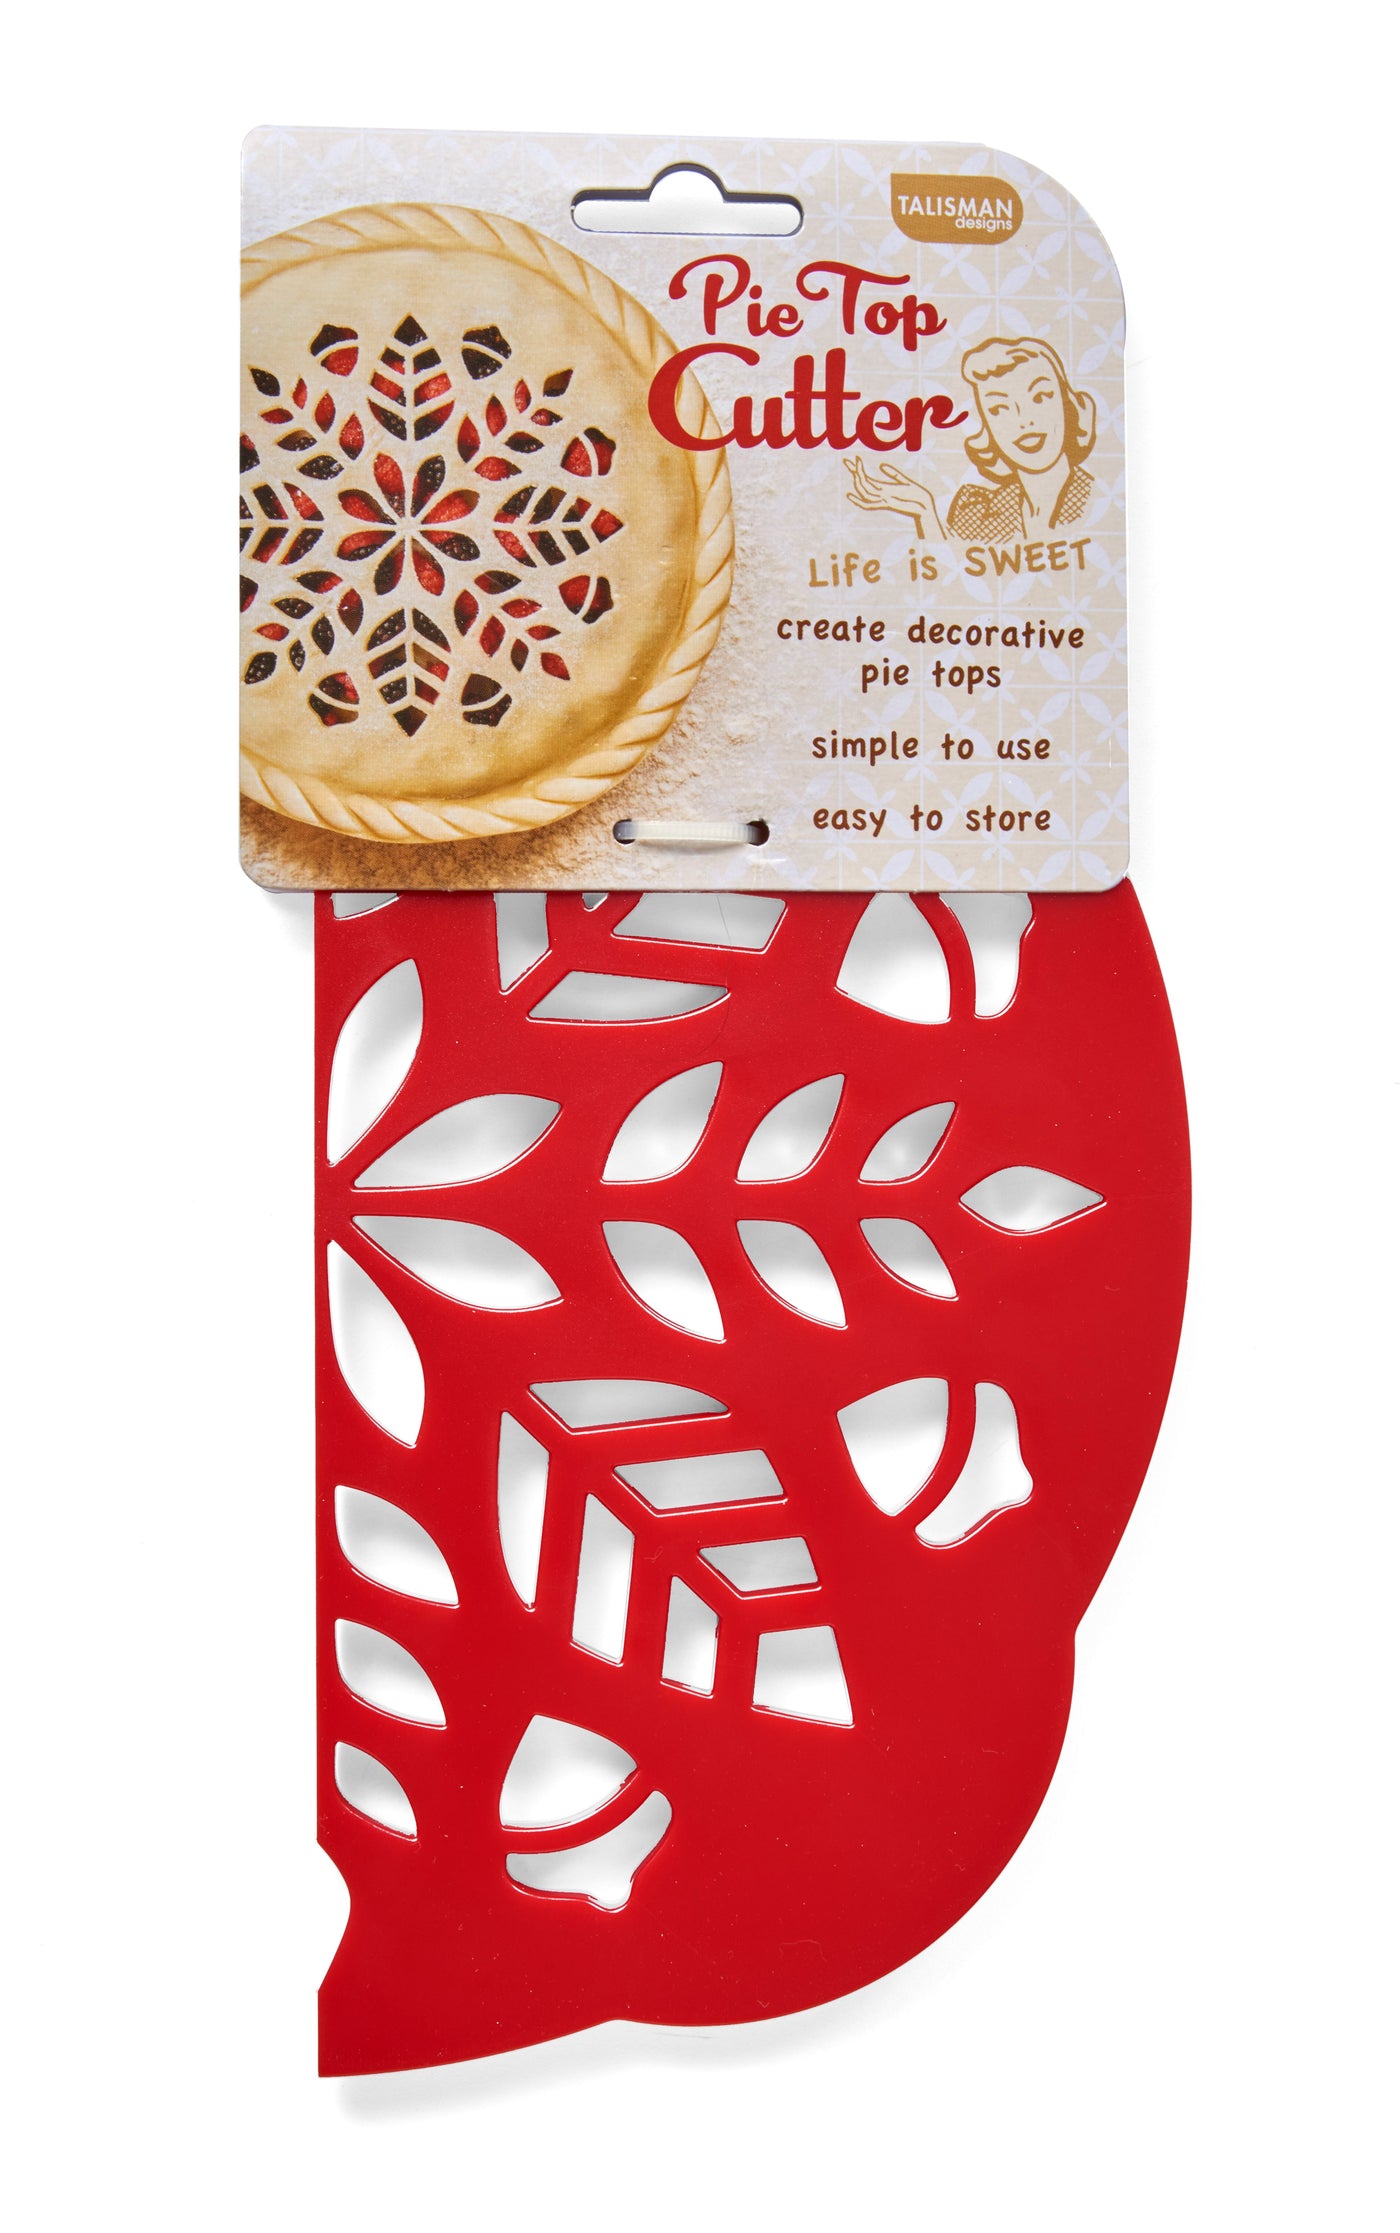 Sweet Creations Pie Crust Cutter & Stamp